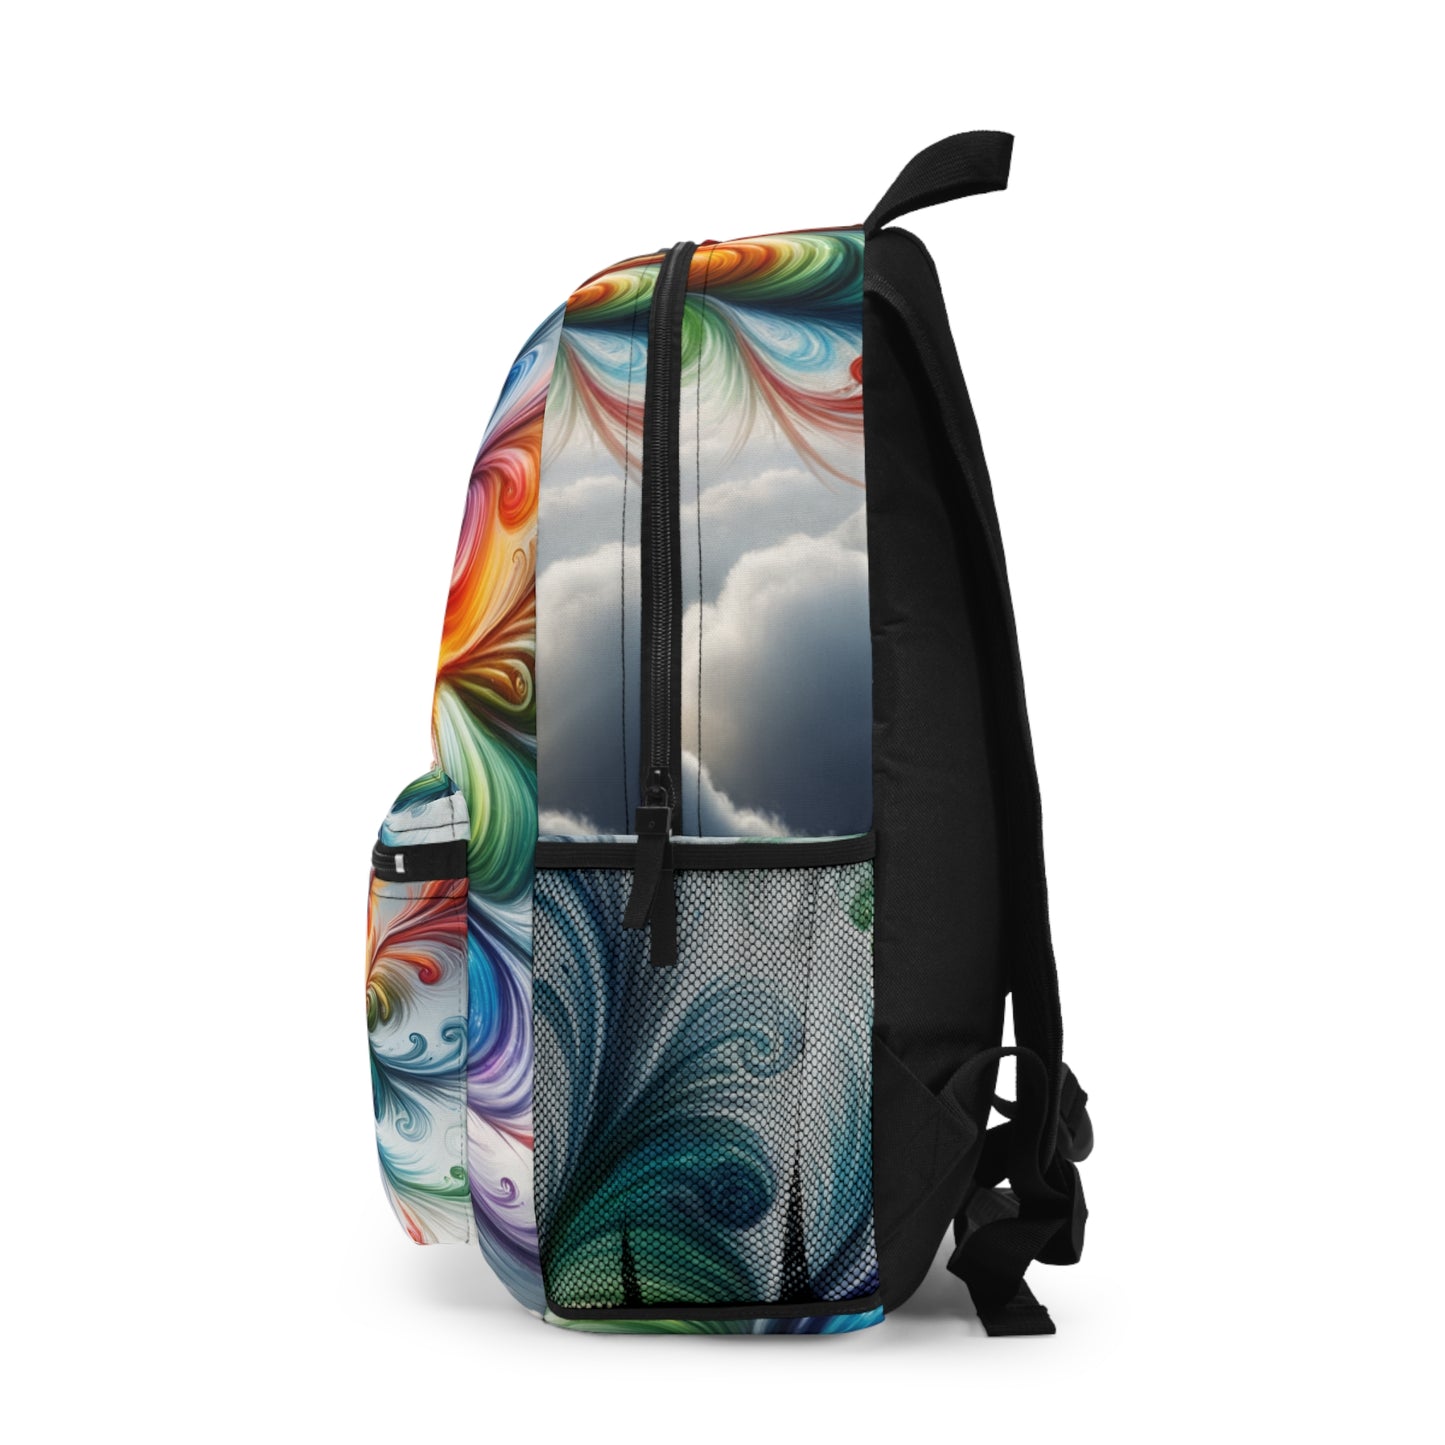 "Yogini's Rainbow Flight" - Backpack